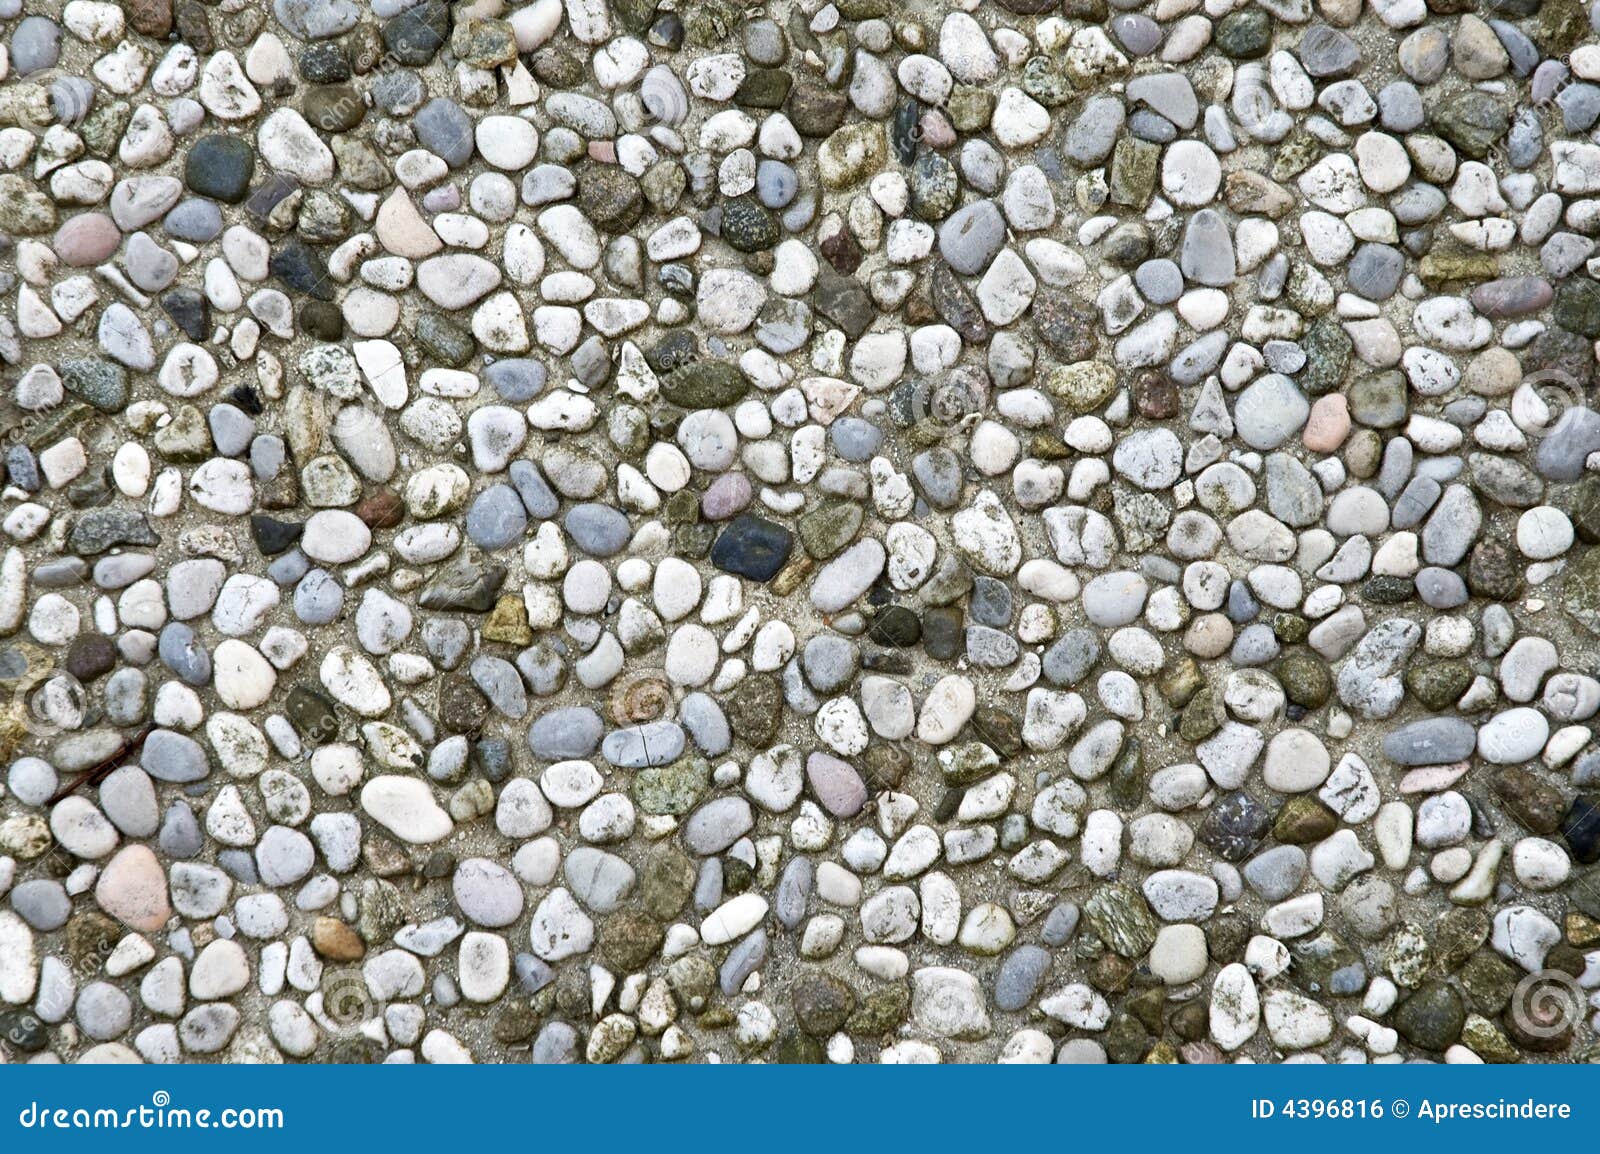 pebbles mosaic